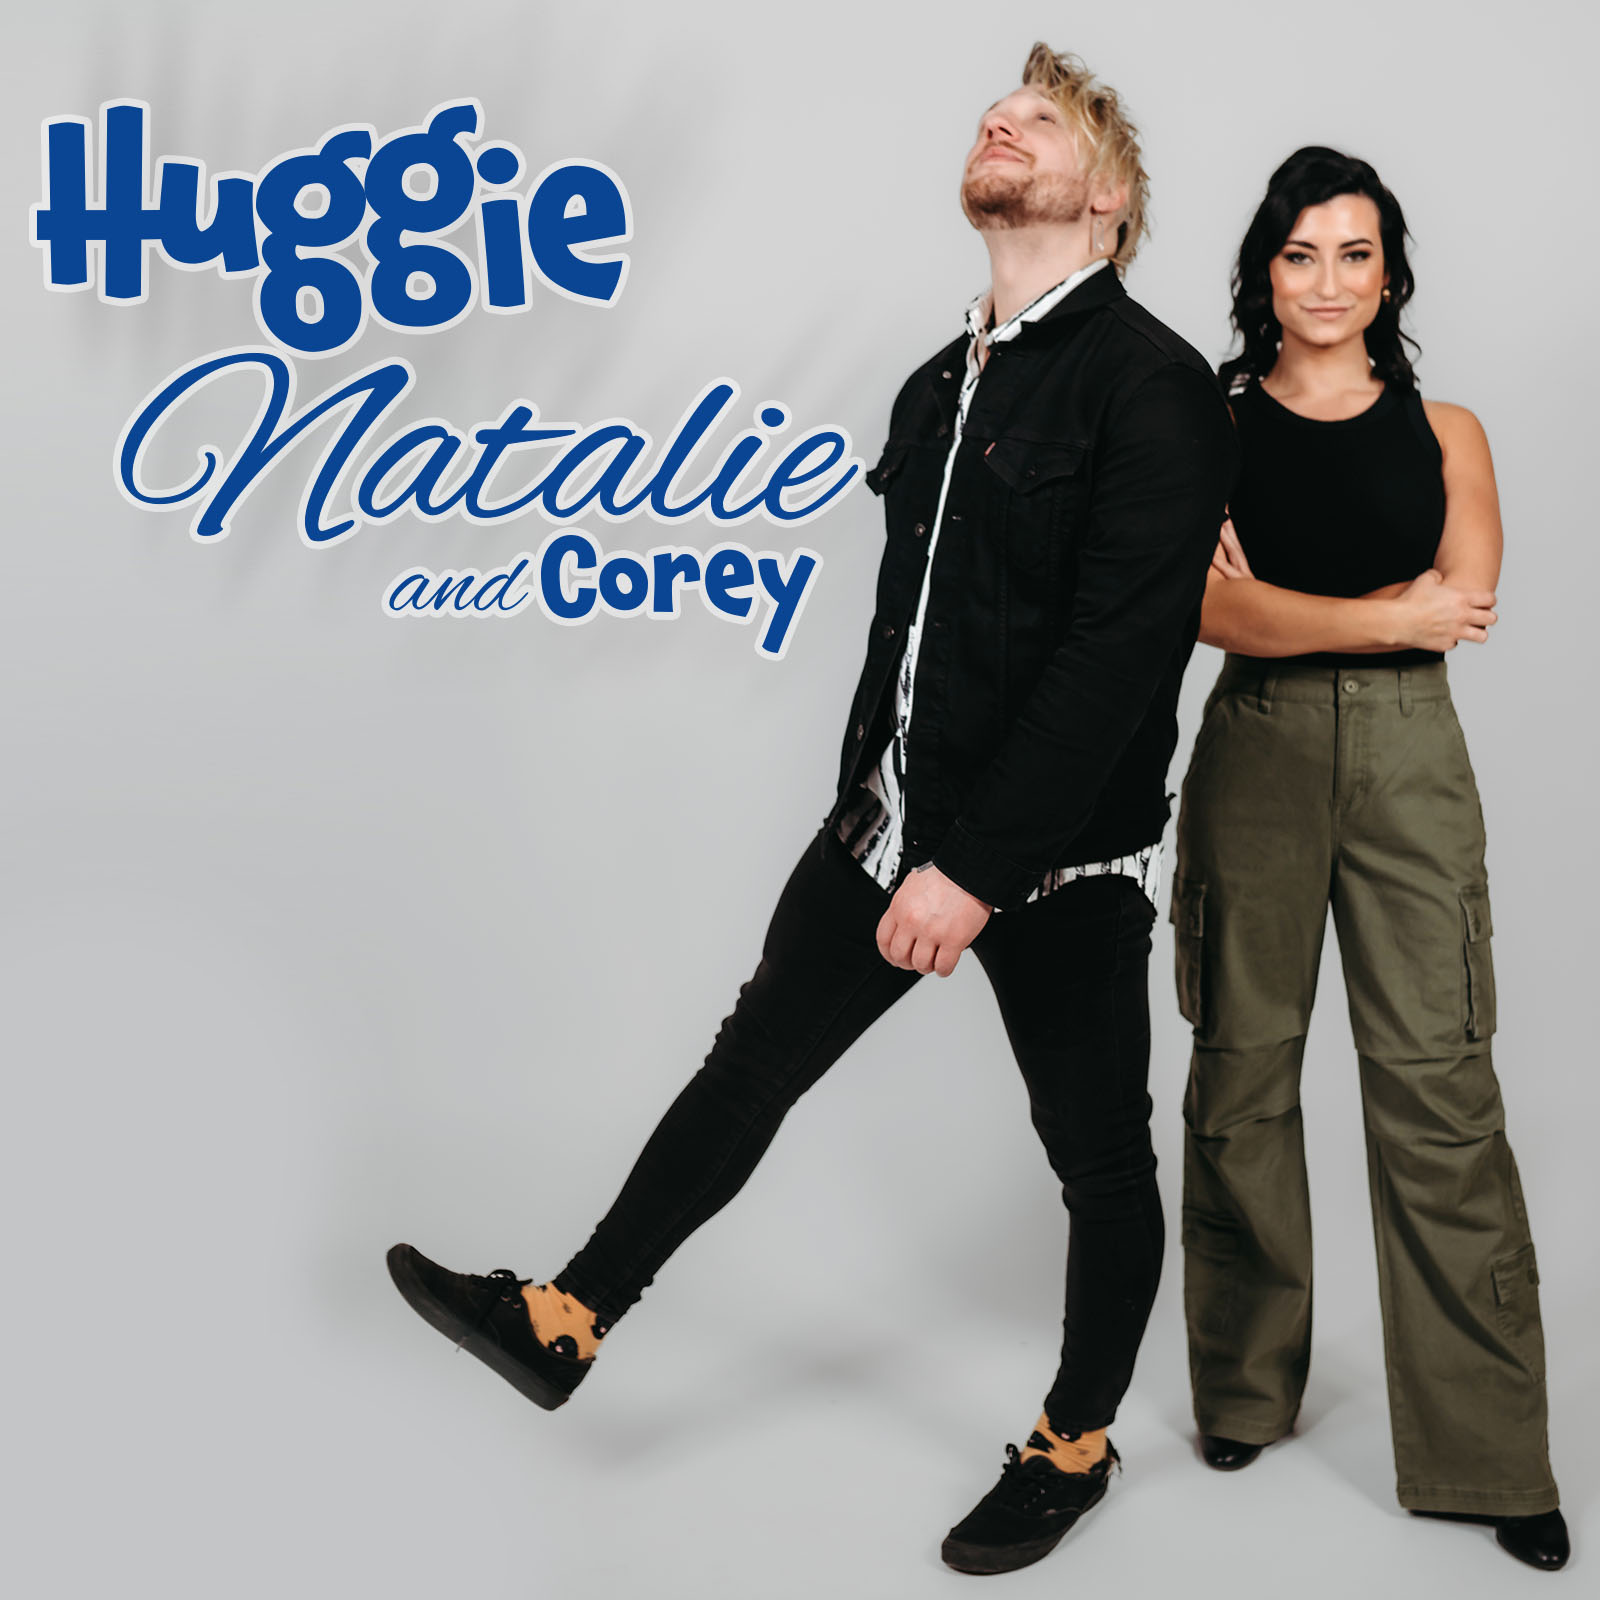 Huggie, Natalie and Corey